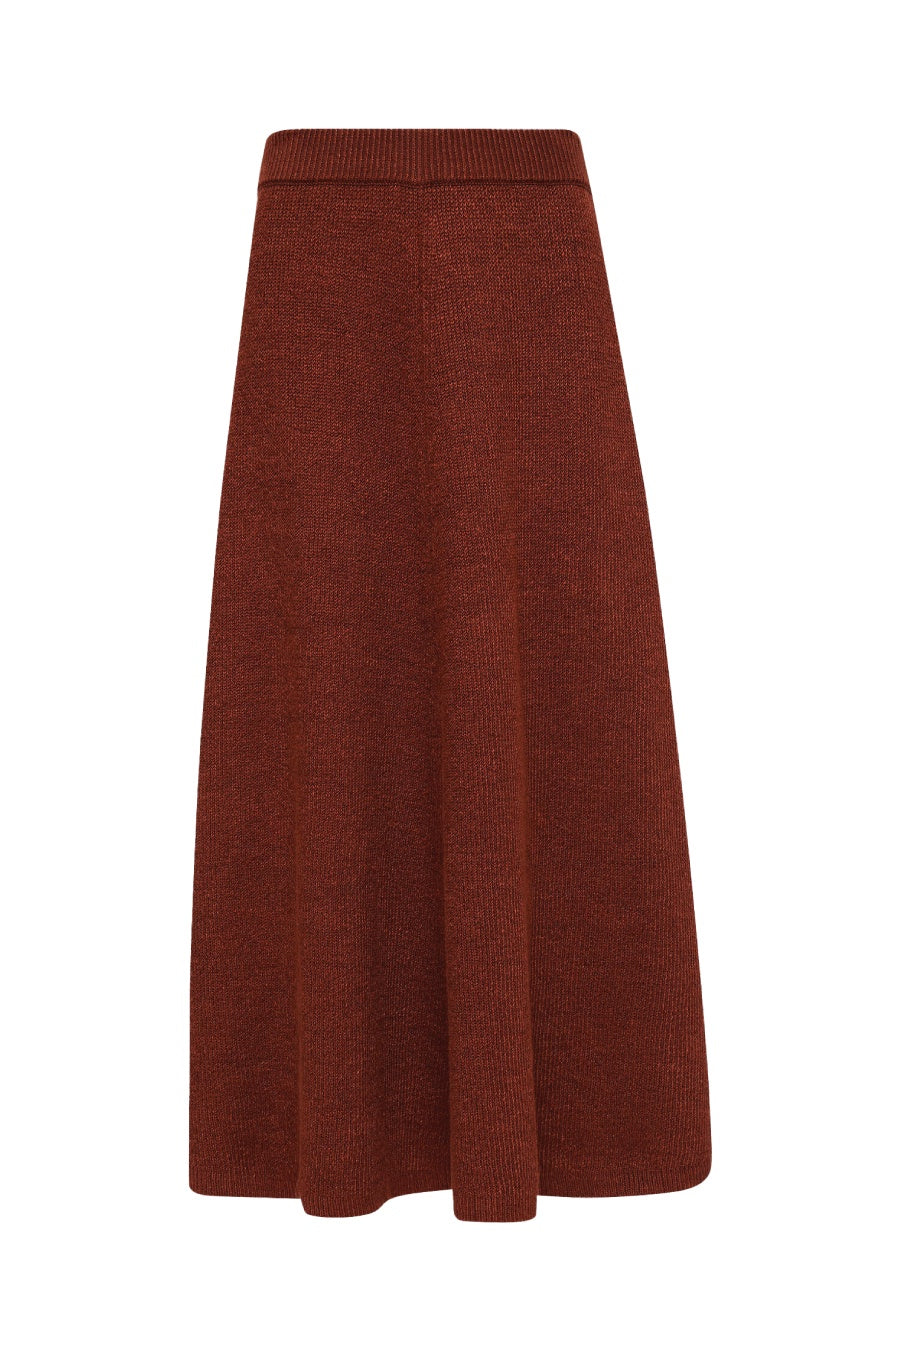 Joseph Linen Cardigan Stitch Knit Skirt - Chestnut